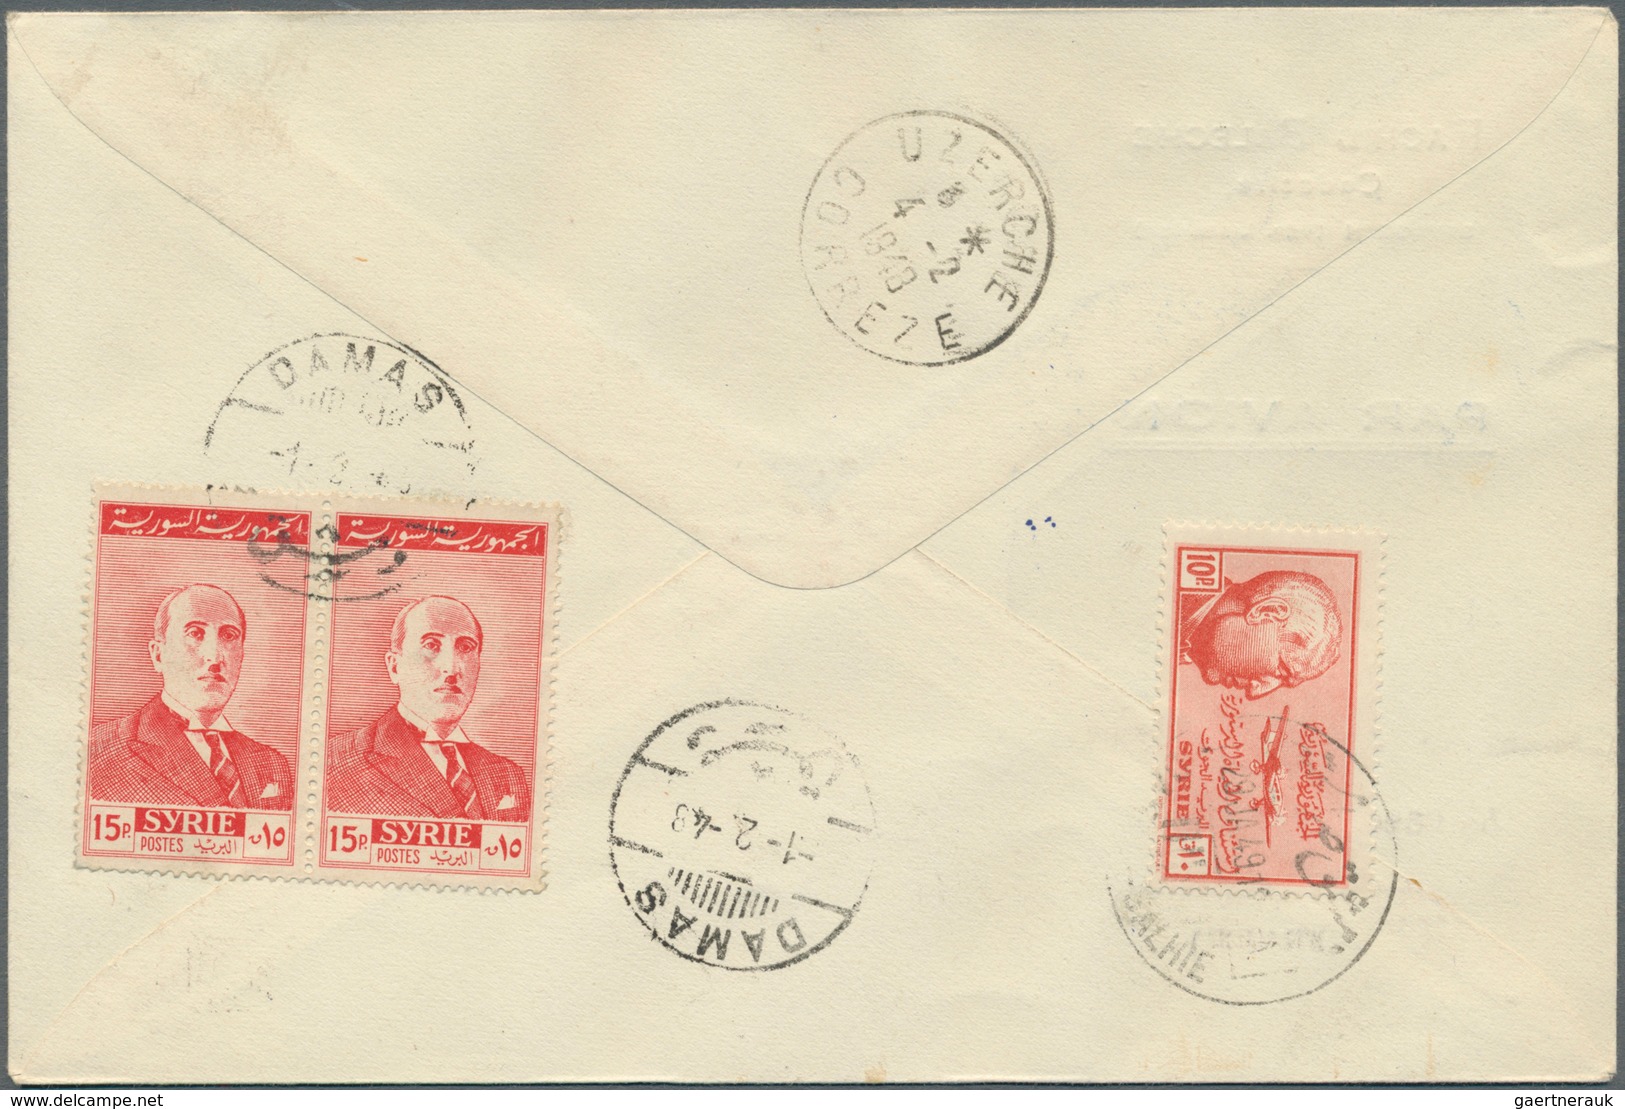 Syrien: 1945, President Shukri Al-Quwatli, 5pi. Green, Imperforate Mini Sheet With Four Stamps (slig - Syrien